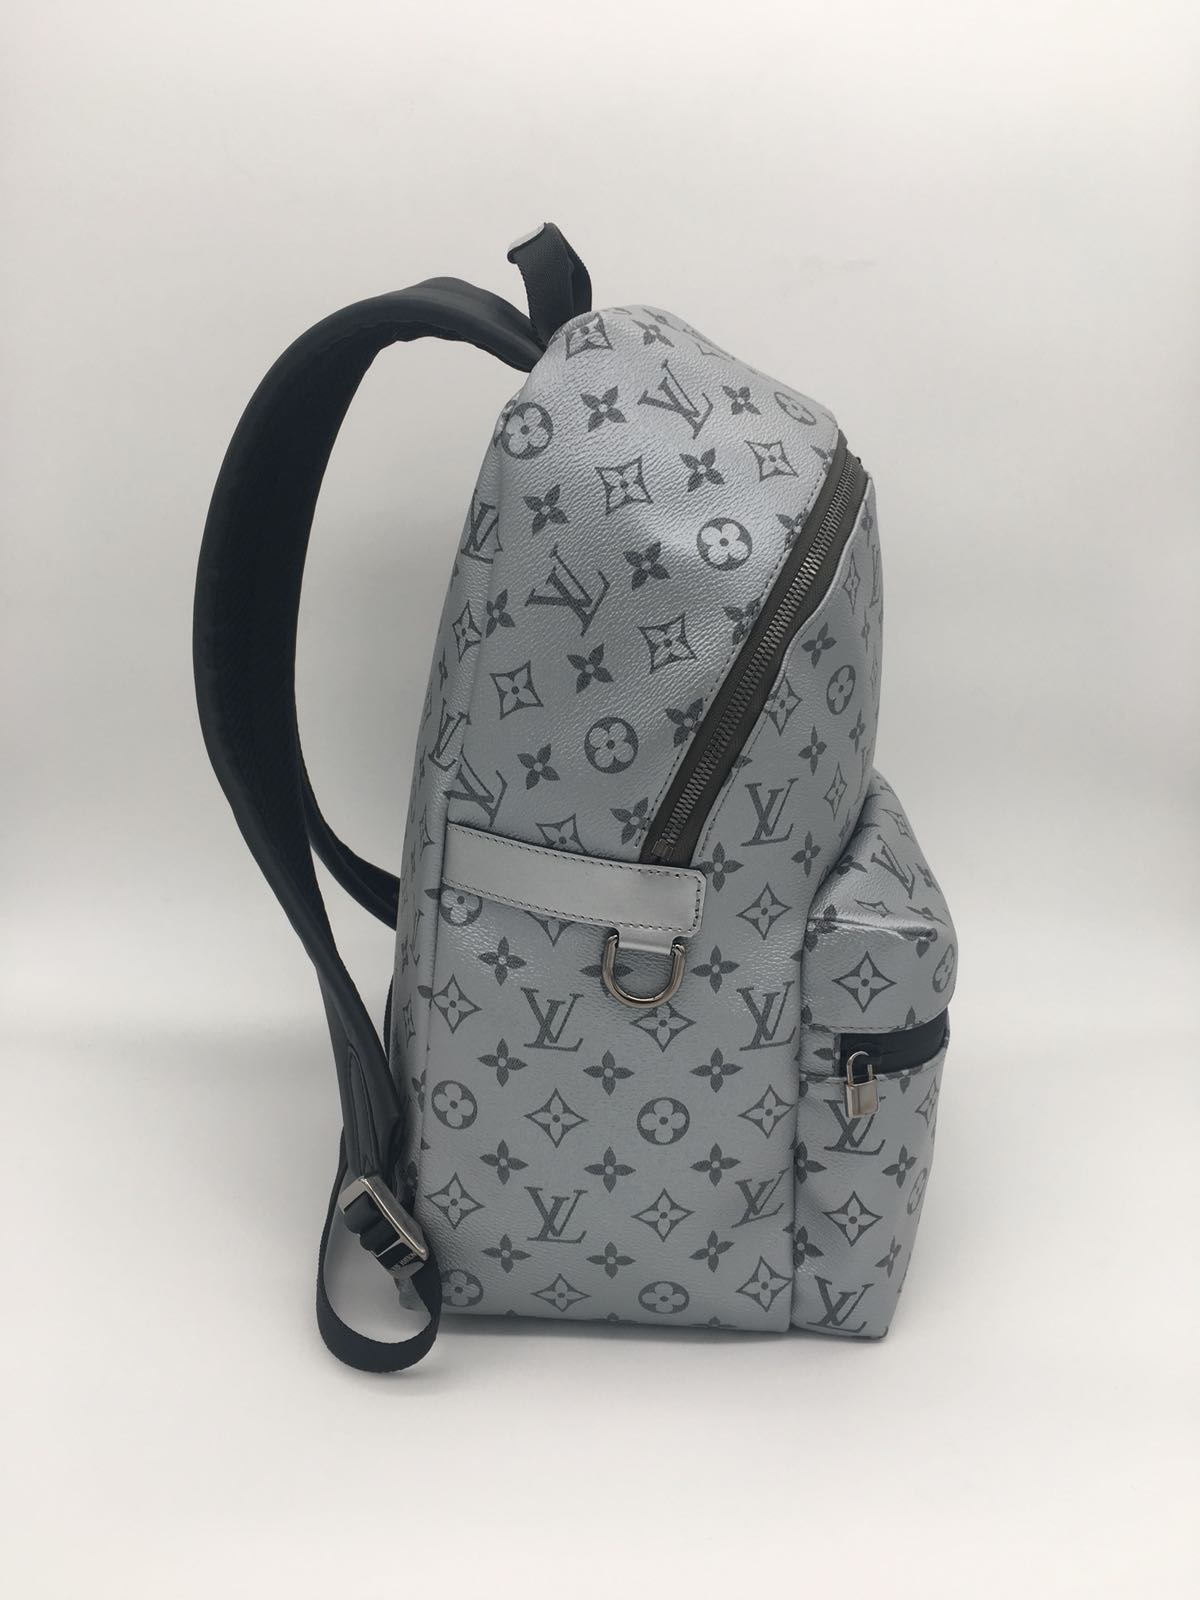 Louis Vuitton monogram silver reflect apollo backpack (rare item